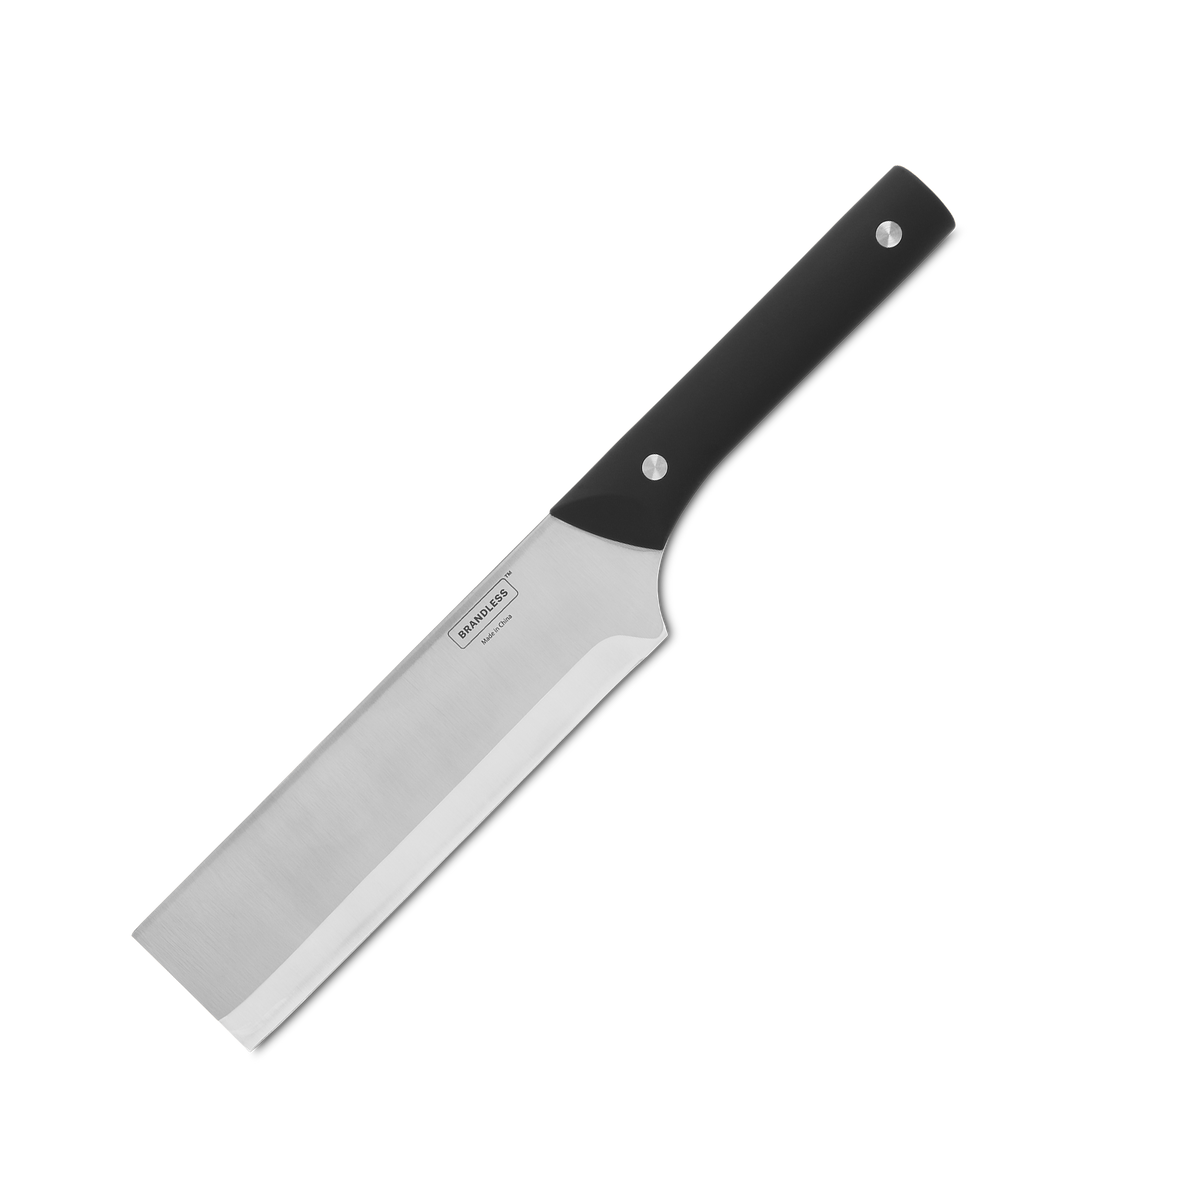 Product photo, nakiri knife with riveted handle.